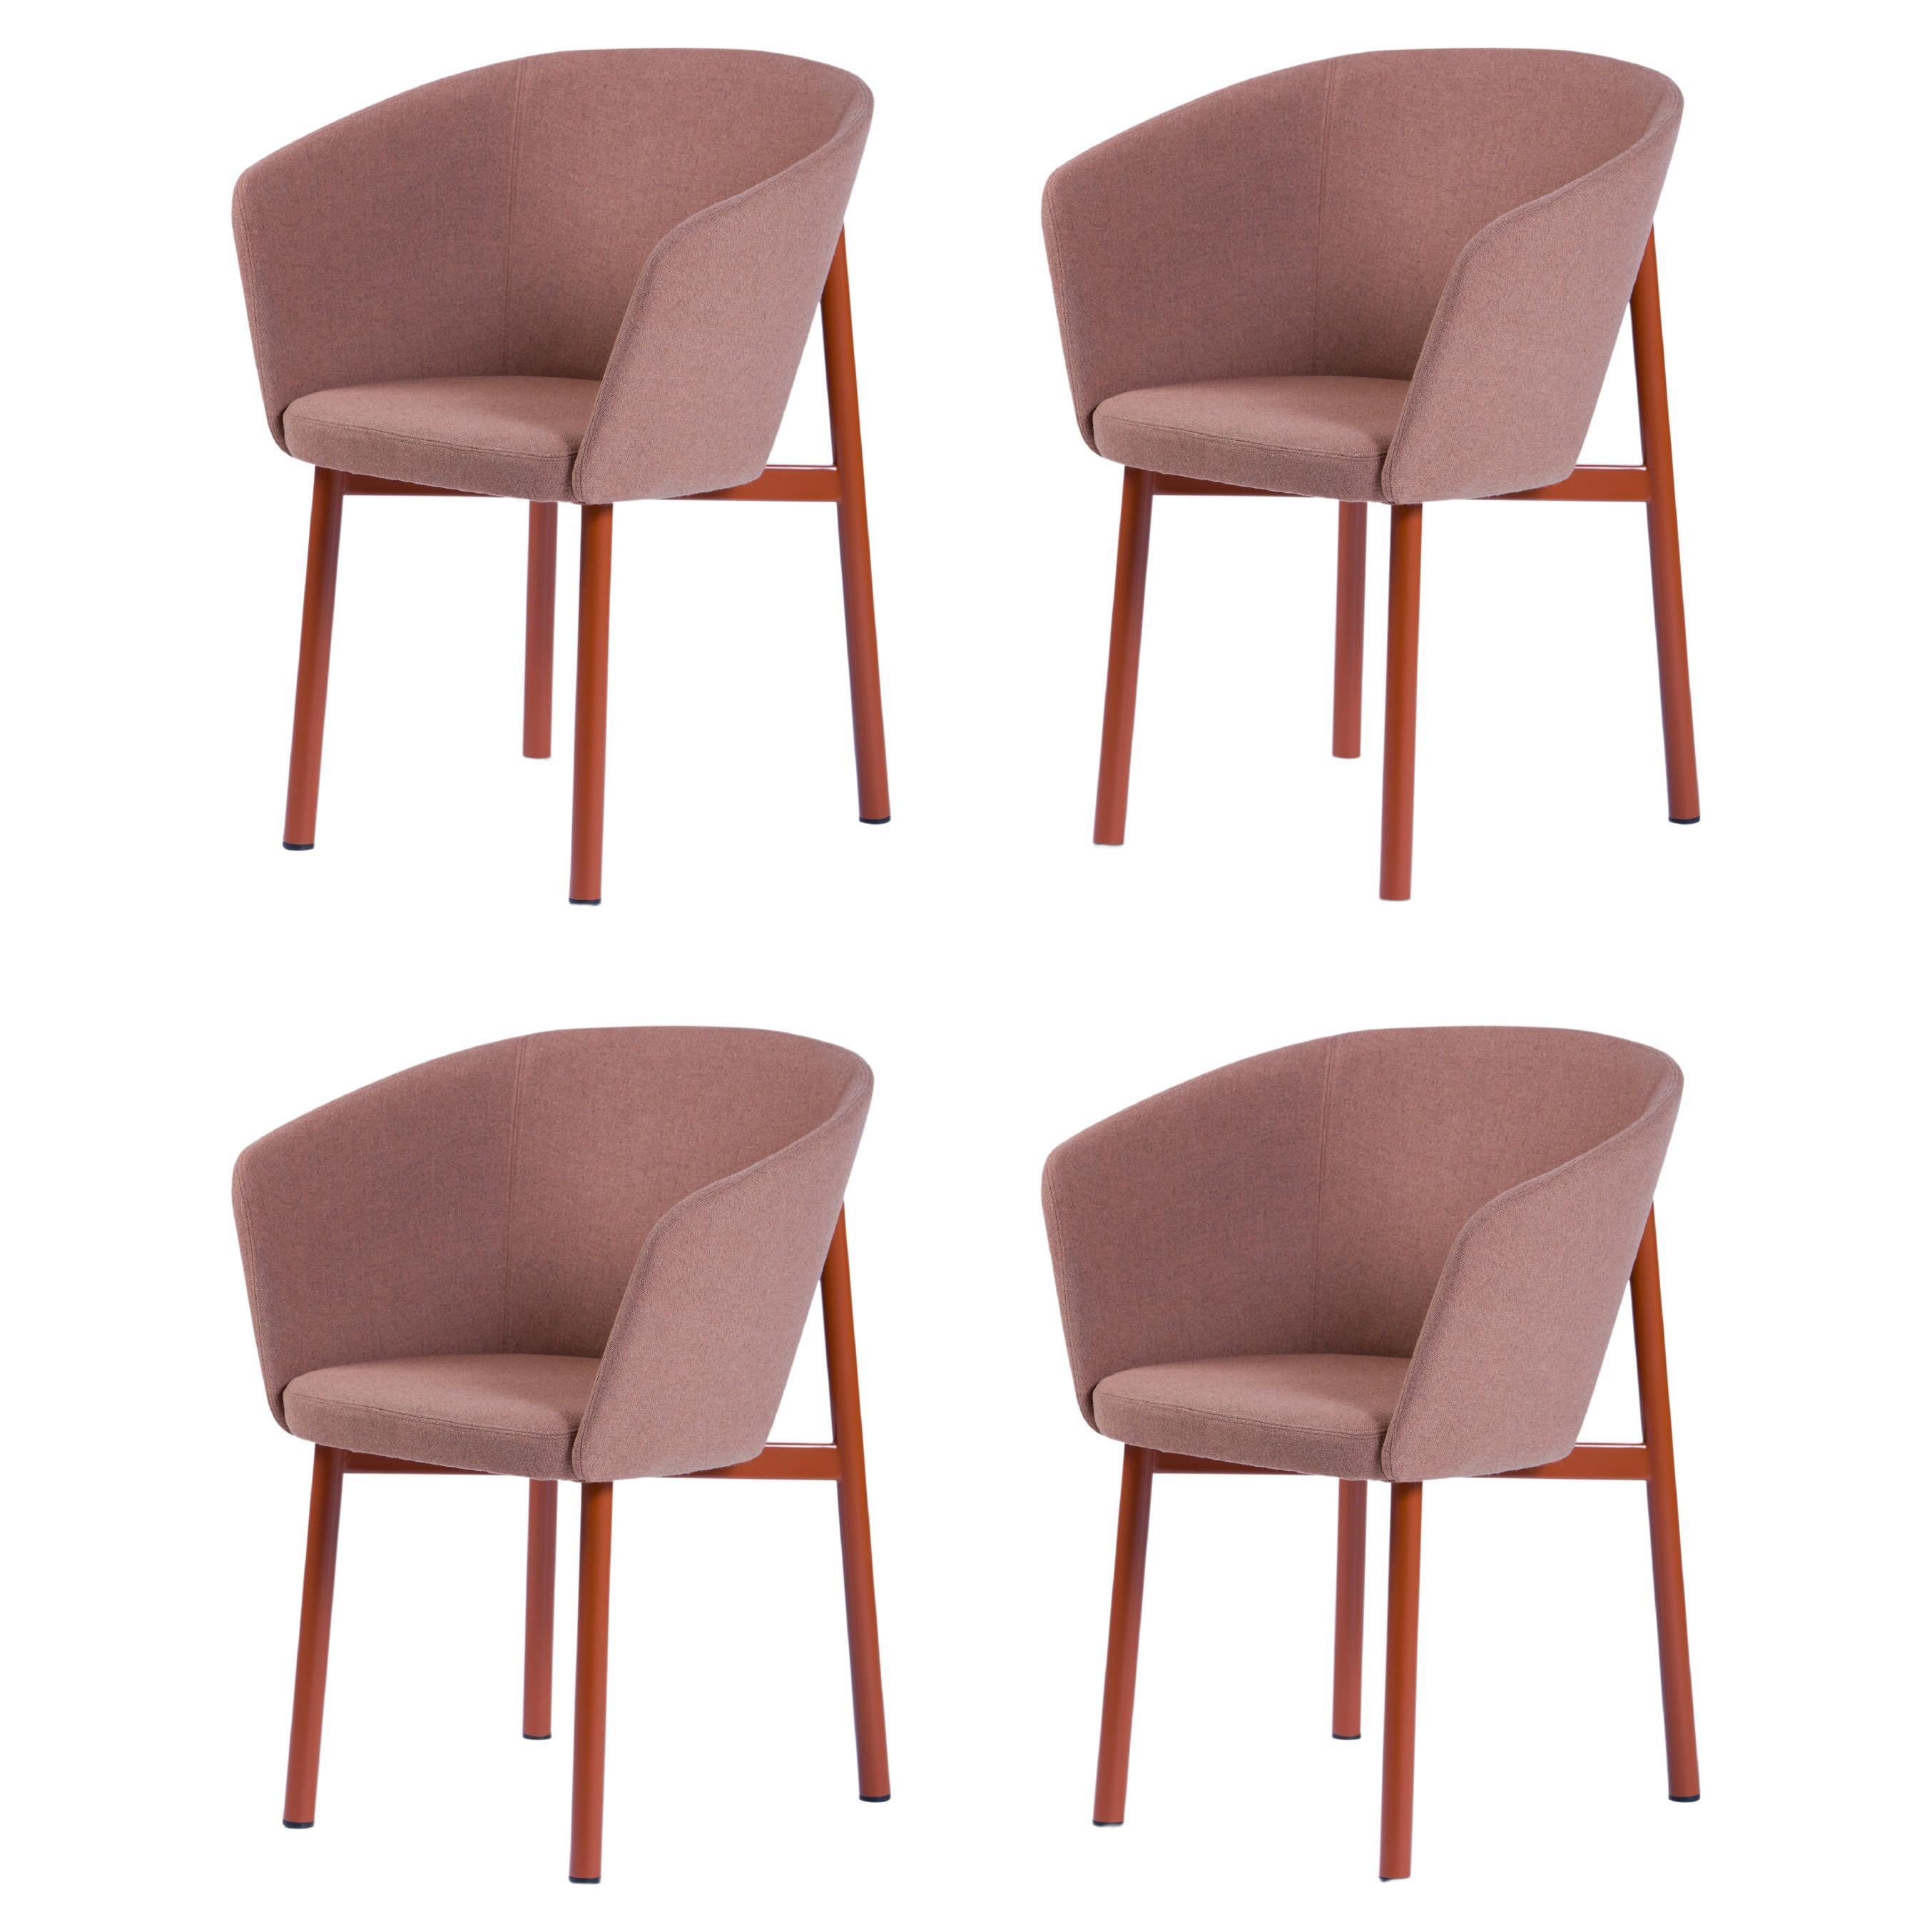 Set of 4 Dusty Pink Residence Bridge Armchair by Kann Design